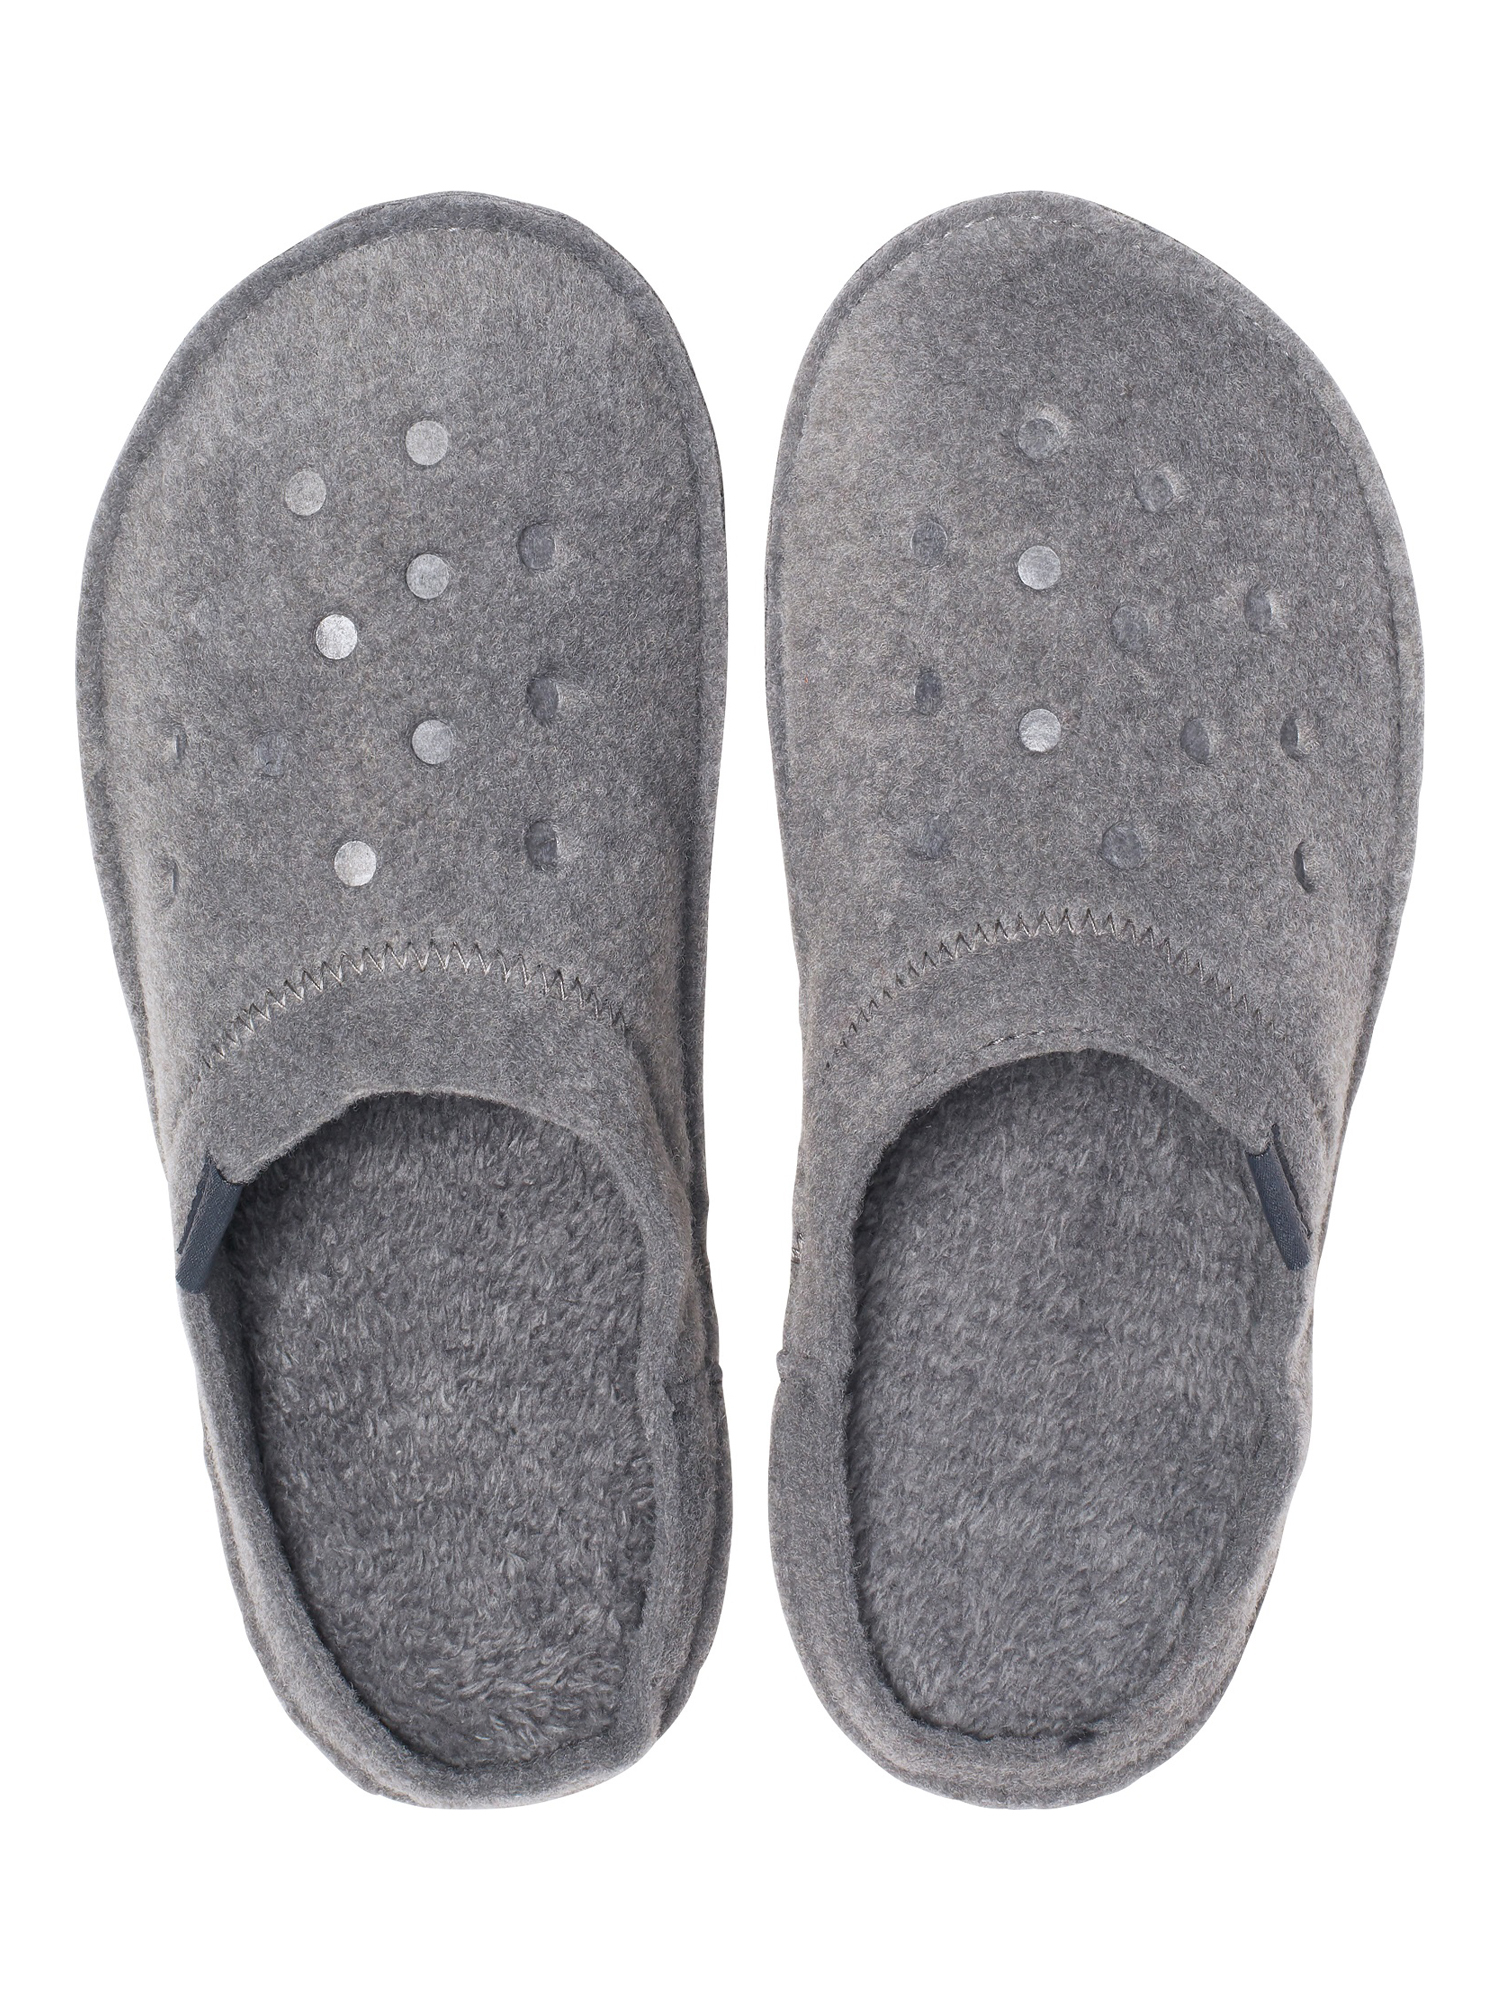 Crocs Unisex Classic Comfort Slippers - image 4 of 9